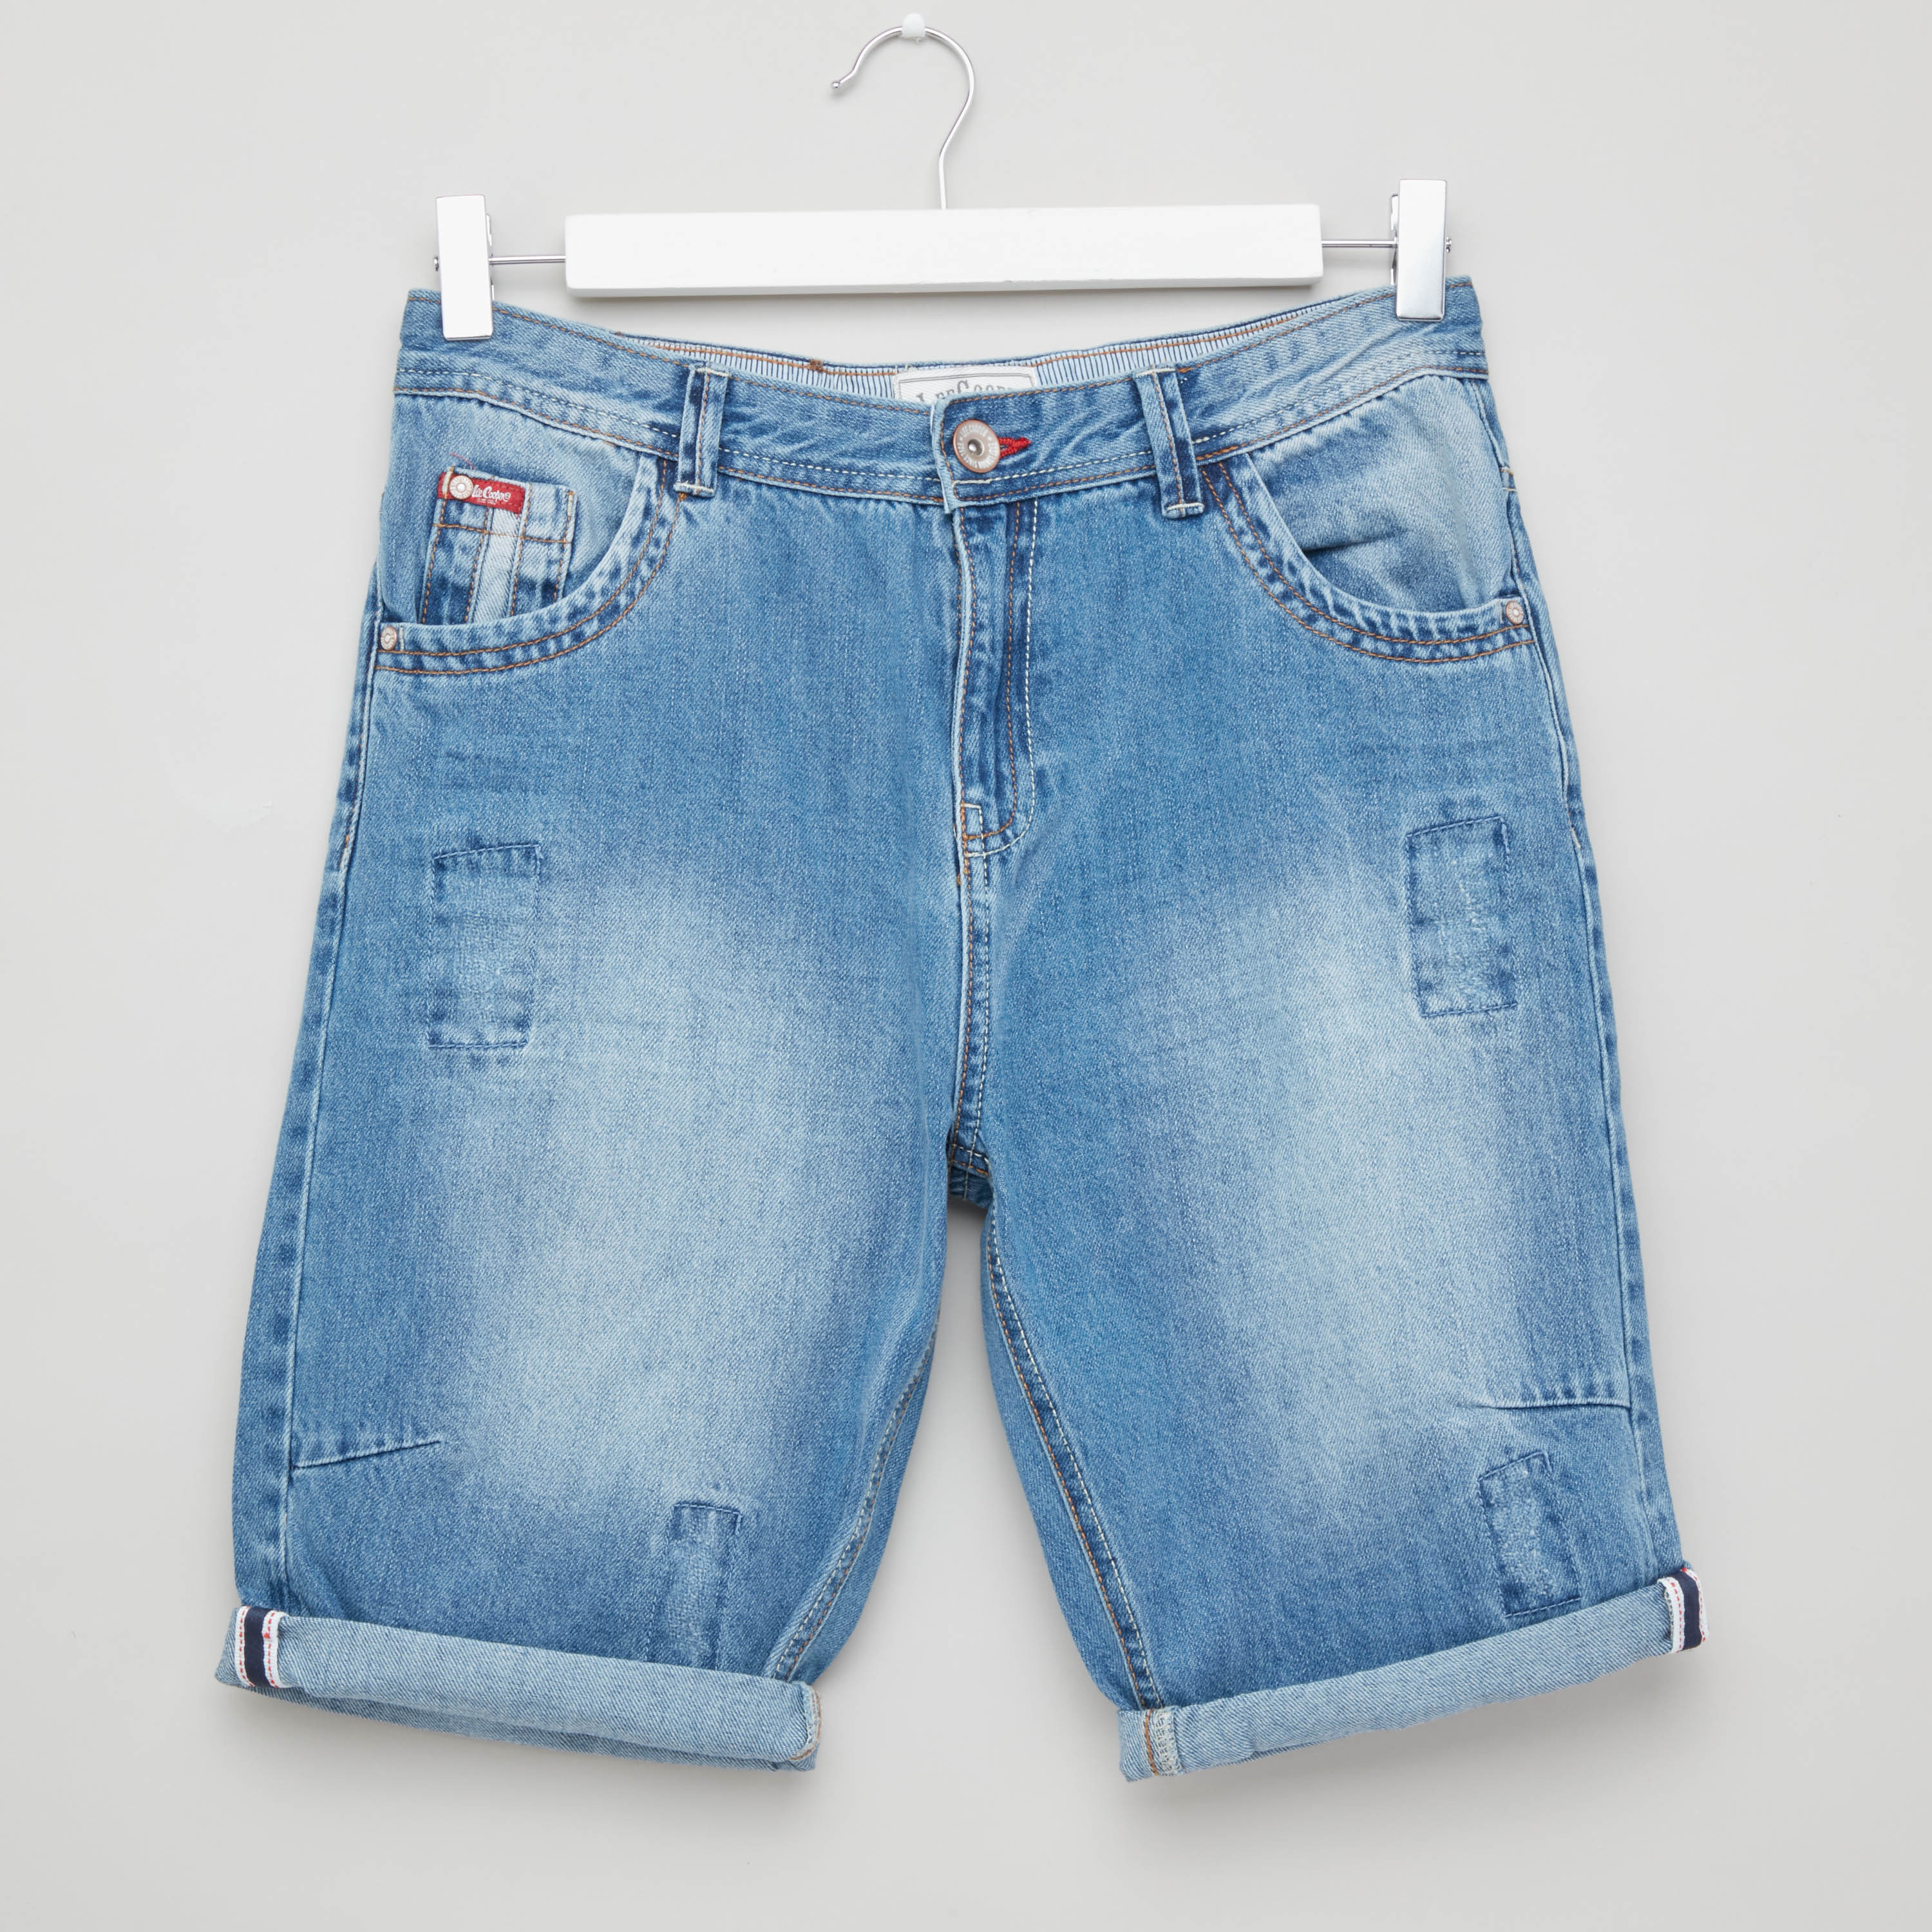 LEE COOPER Womens Ladies UK 14 Blue Denim Jeans Shorts RRP £29.99 BNWT |  eBay